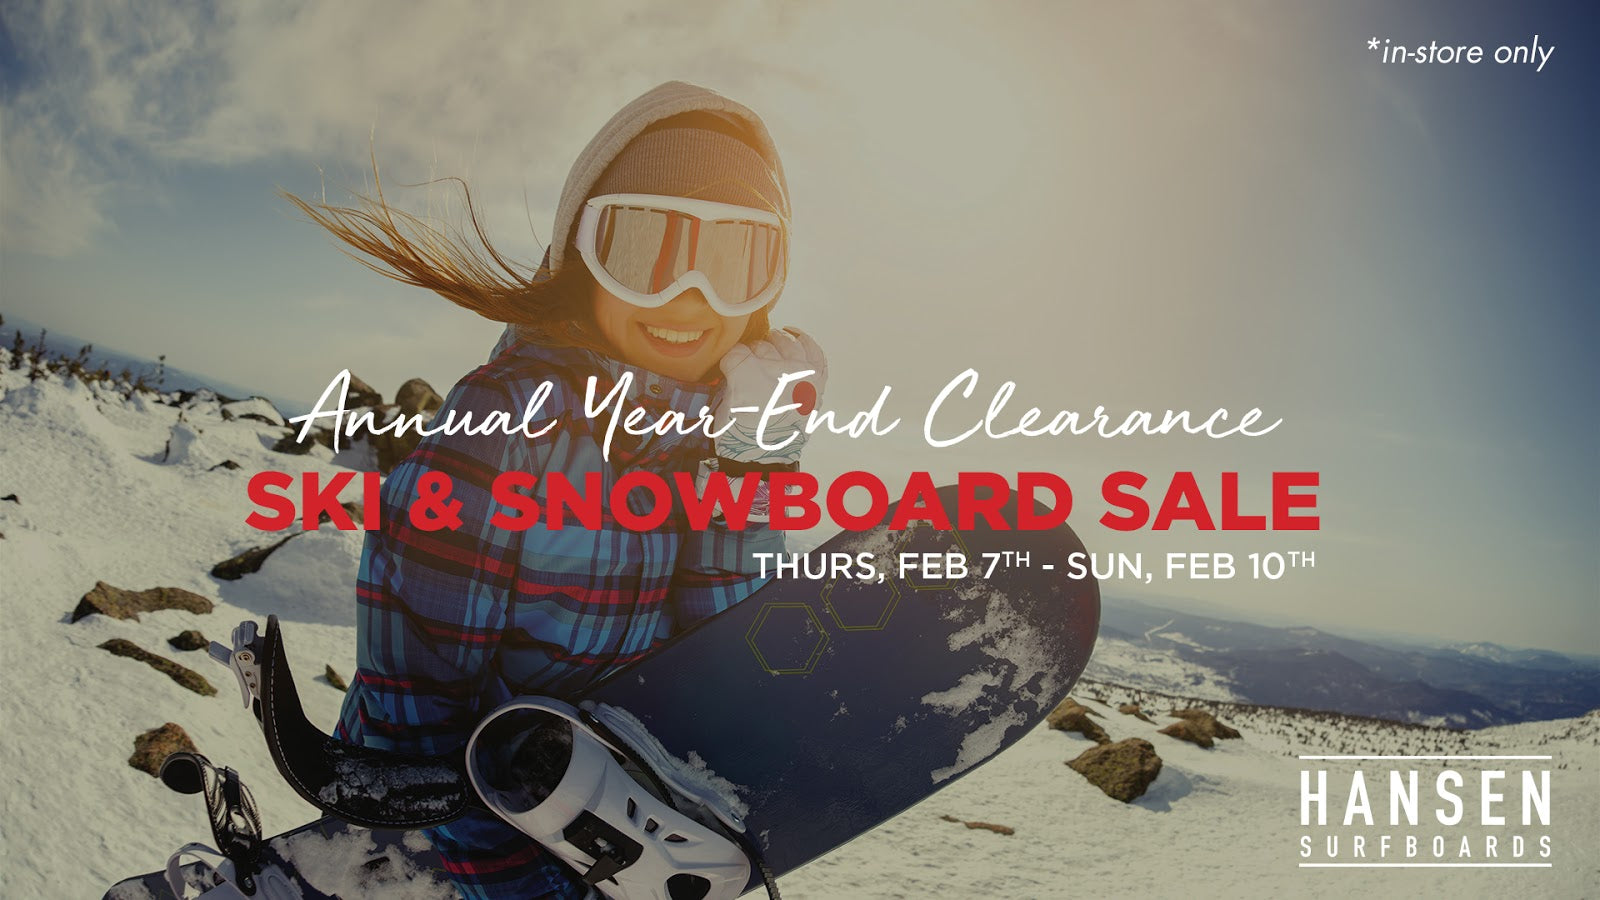 ouder telescoop Horen van Hansen's Annual Year-End Clearance Ski & Snowboard SALE